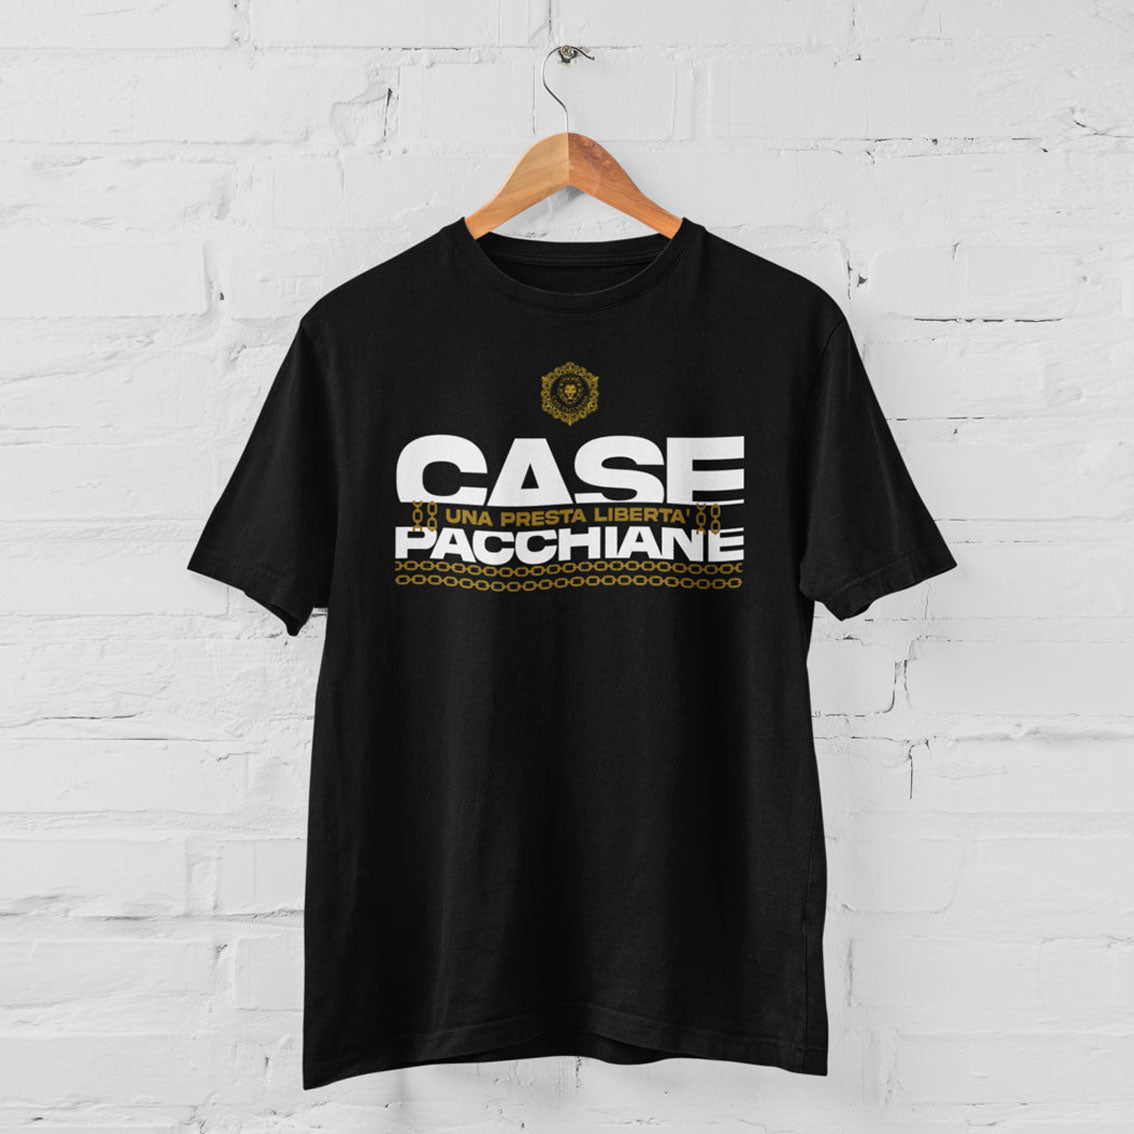 Official Case Pacchiane "Presta Libertà" T-shirt